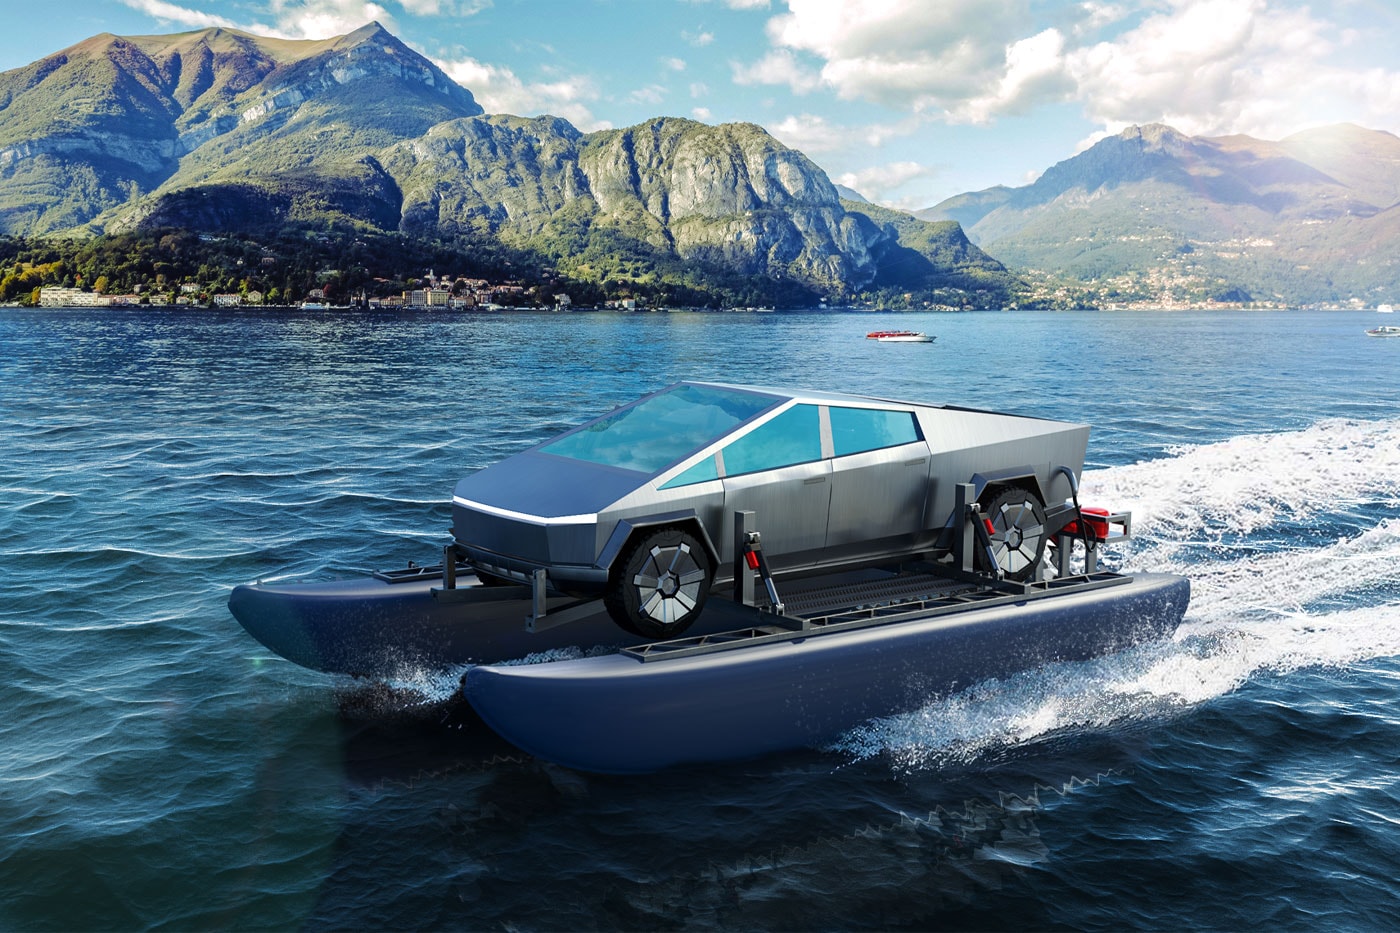 Tesla Cybertruck Catamaran electric vehicles Anthony Diamond tswlm electric vehicles hydrofoils